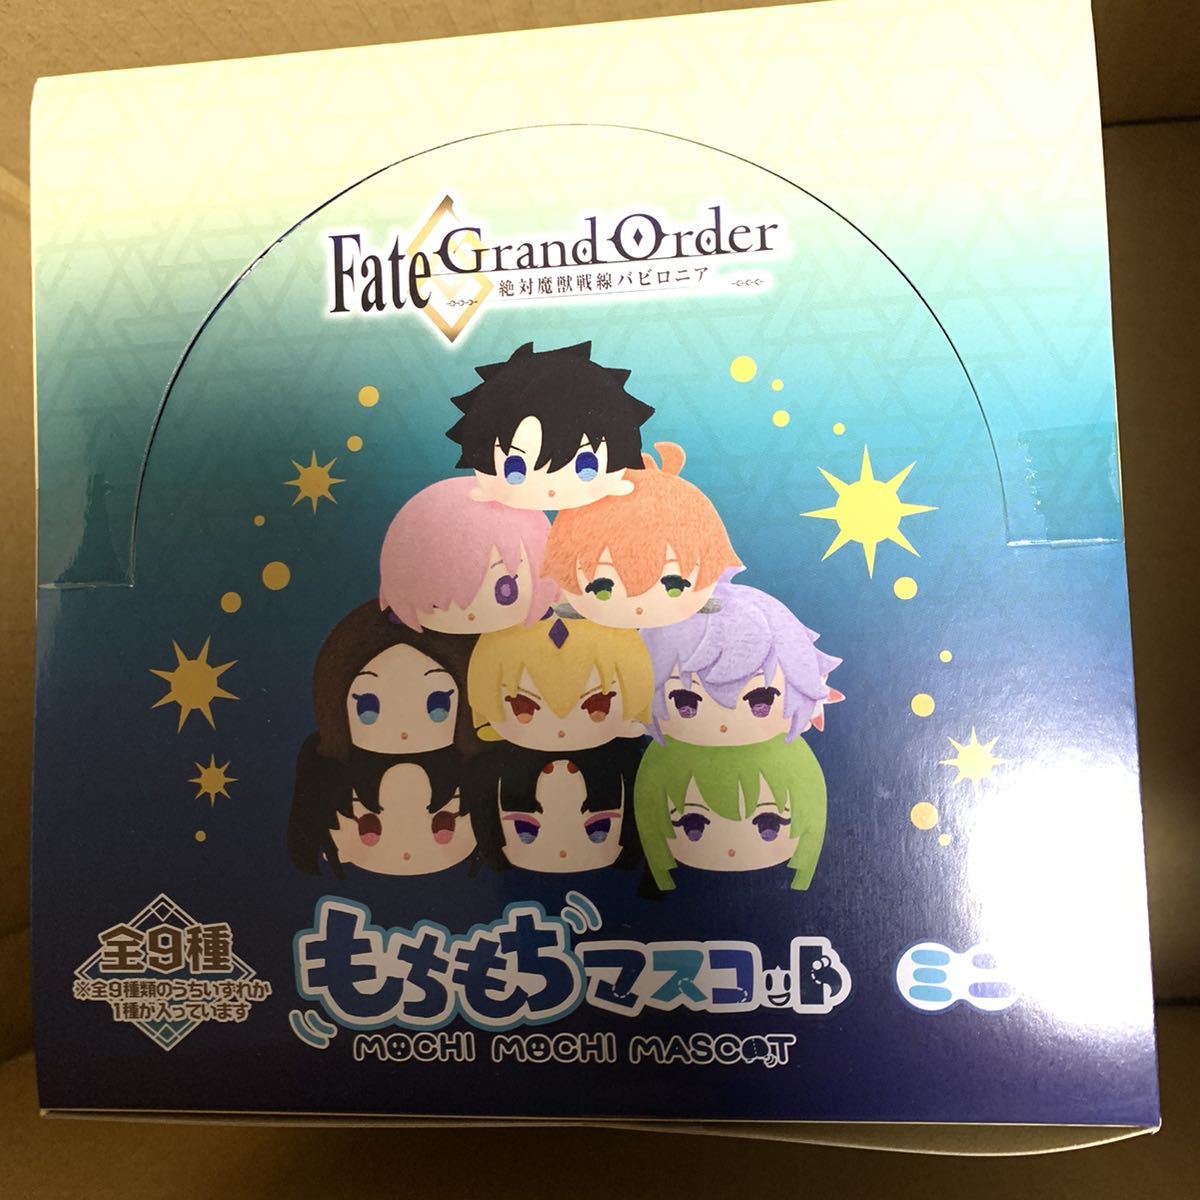 Fgo Fate Grand Order もちもちマスコットミニ1box 特典なしキングゥマーリンロマニギルガメッシュなど日本代购 买对网